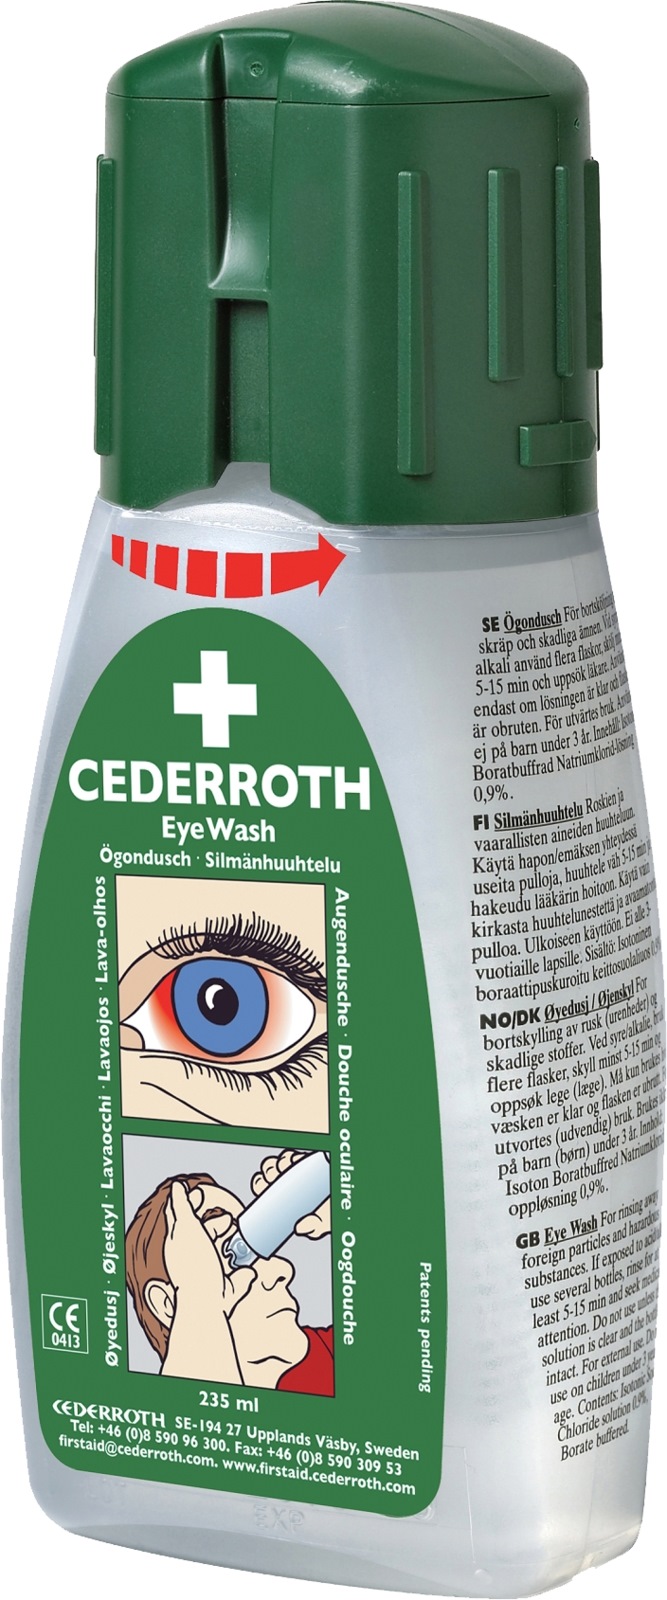 Cederroth øjenskyl lommemodel 235ml